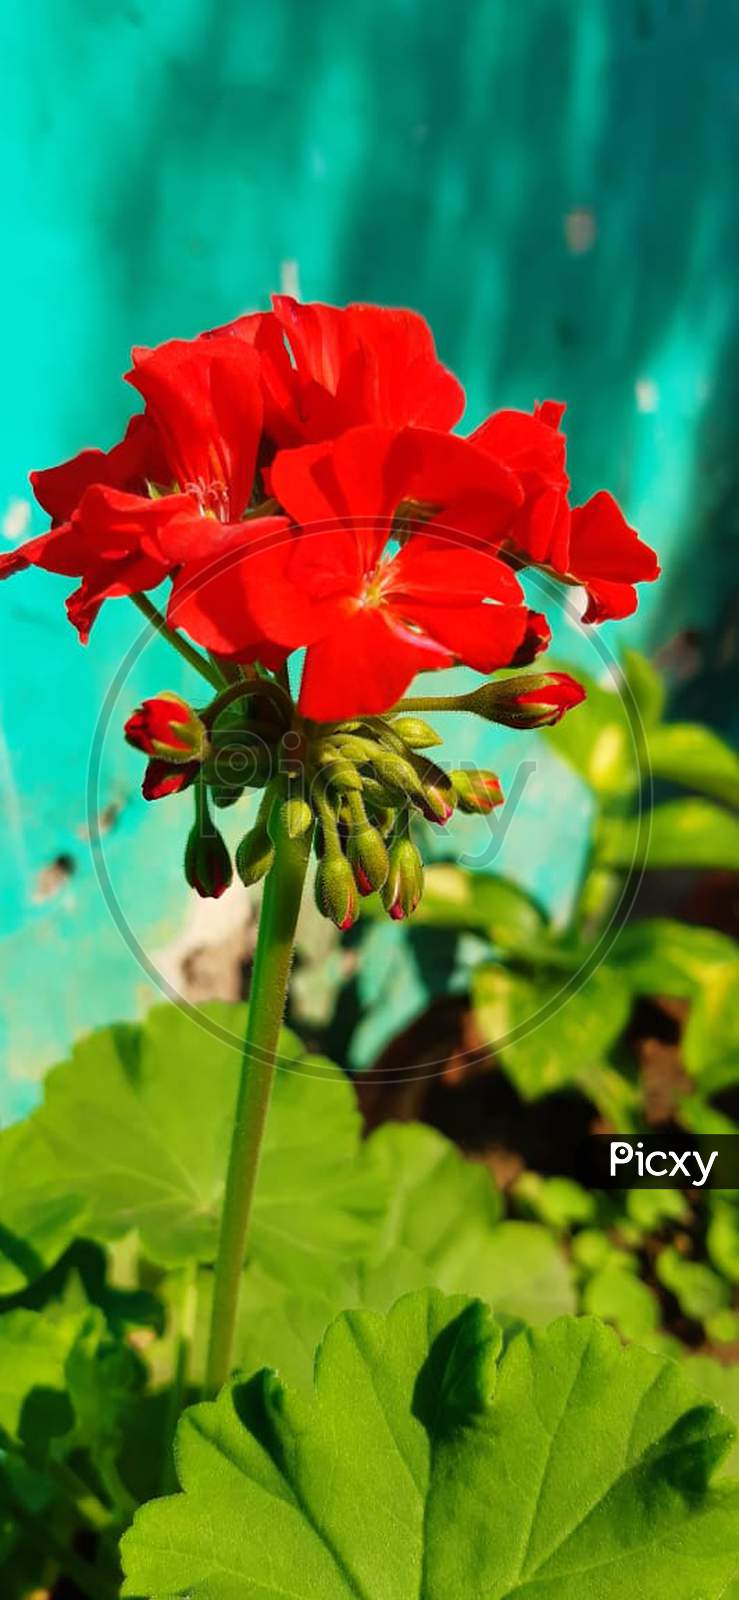 Flower plant